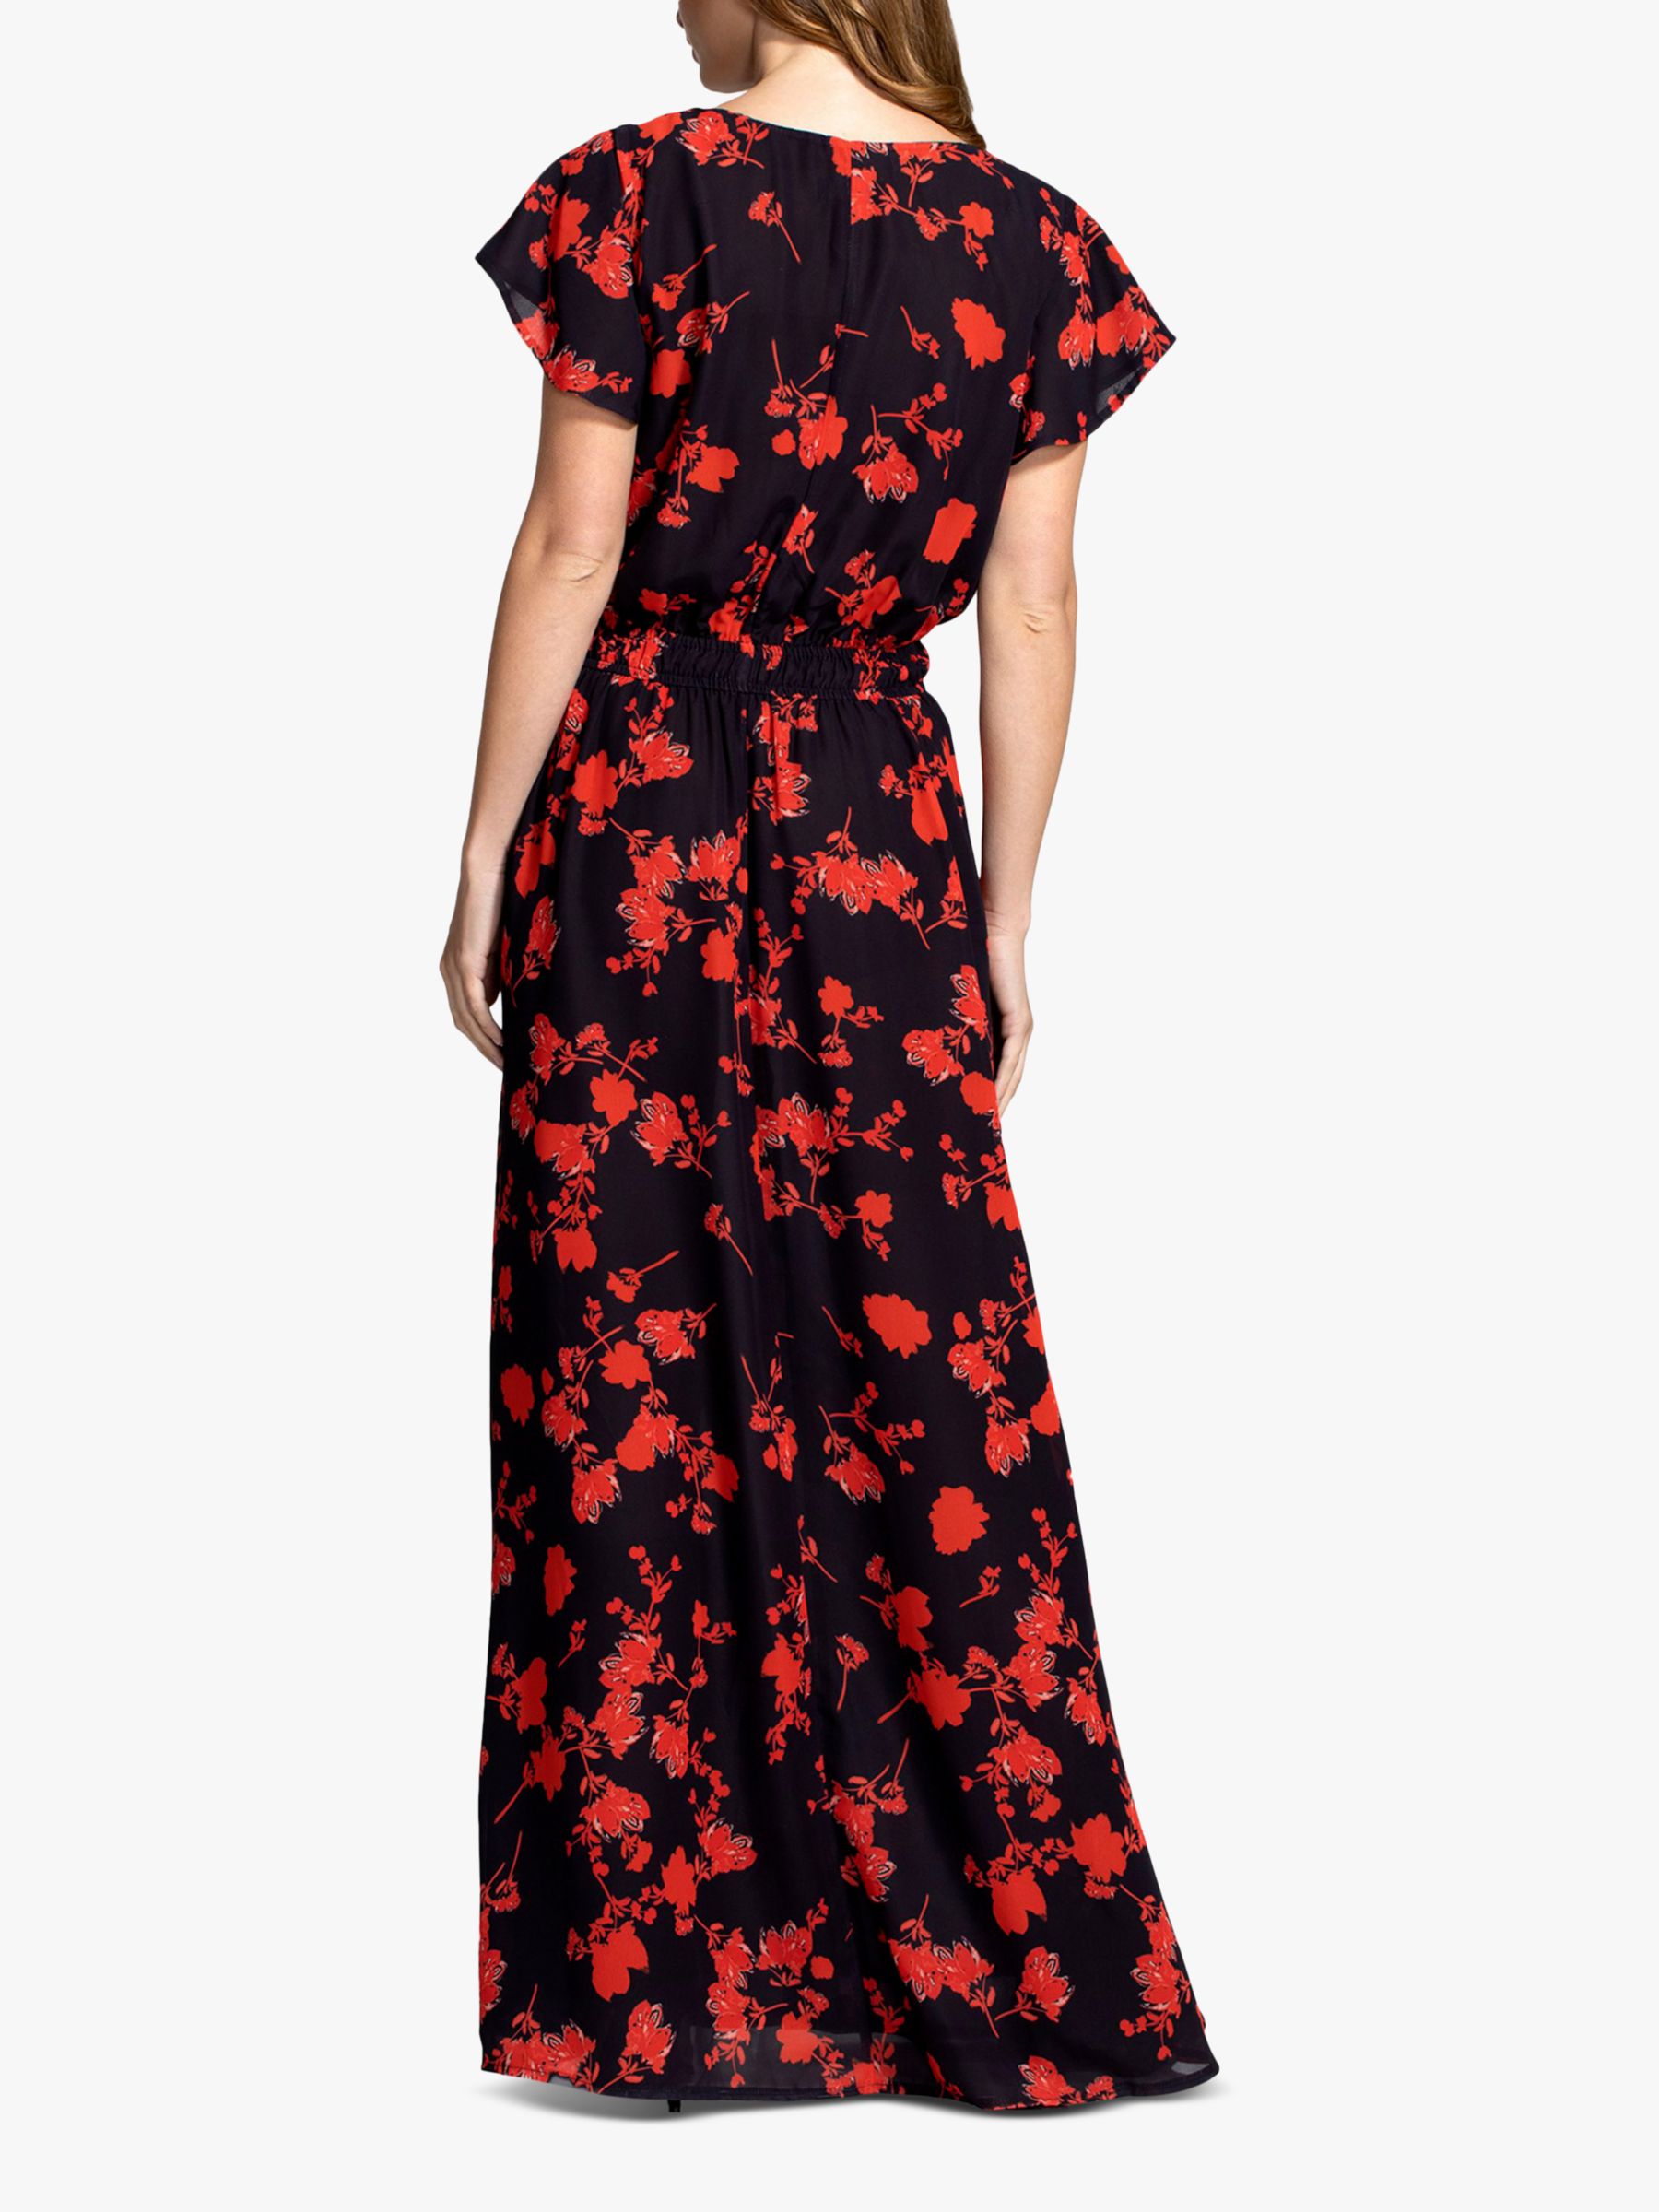 HotSquash Floral Print Wrap Front Maxi Dress, Black/Multi, 8